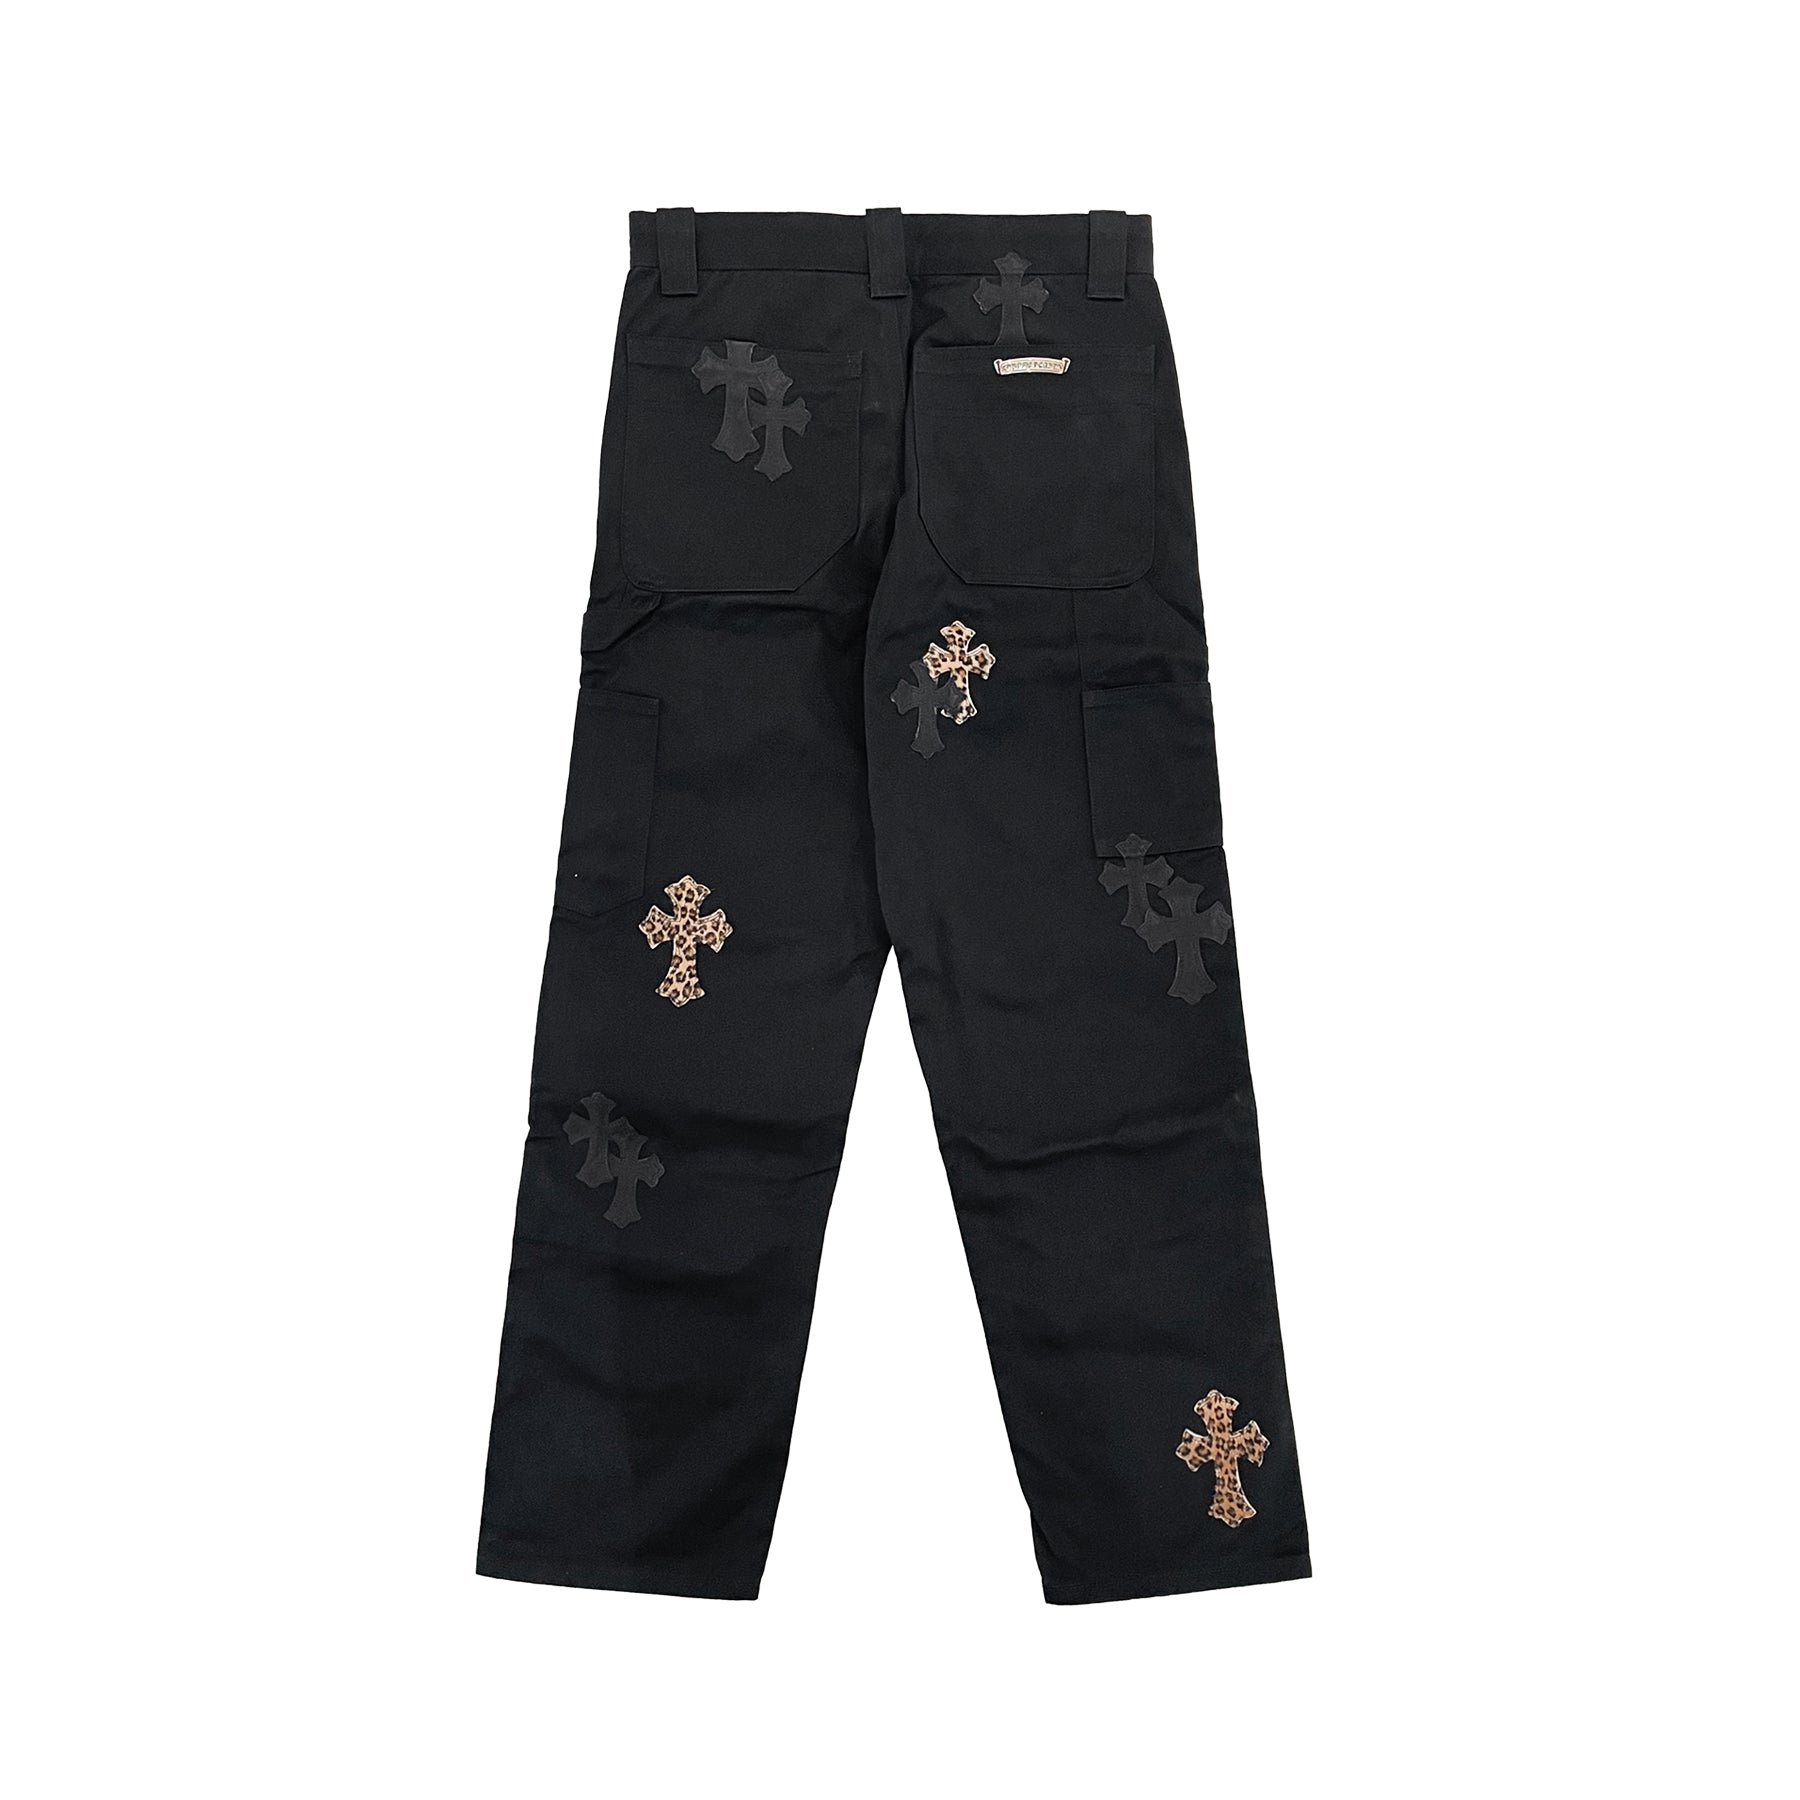 Chrome Hearts Leopard Black Leather Cross Carpenter Pants - SHENGLI ROAD MARKET